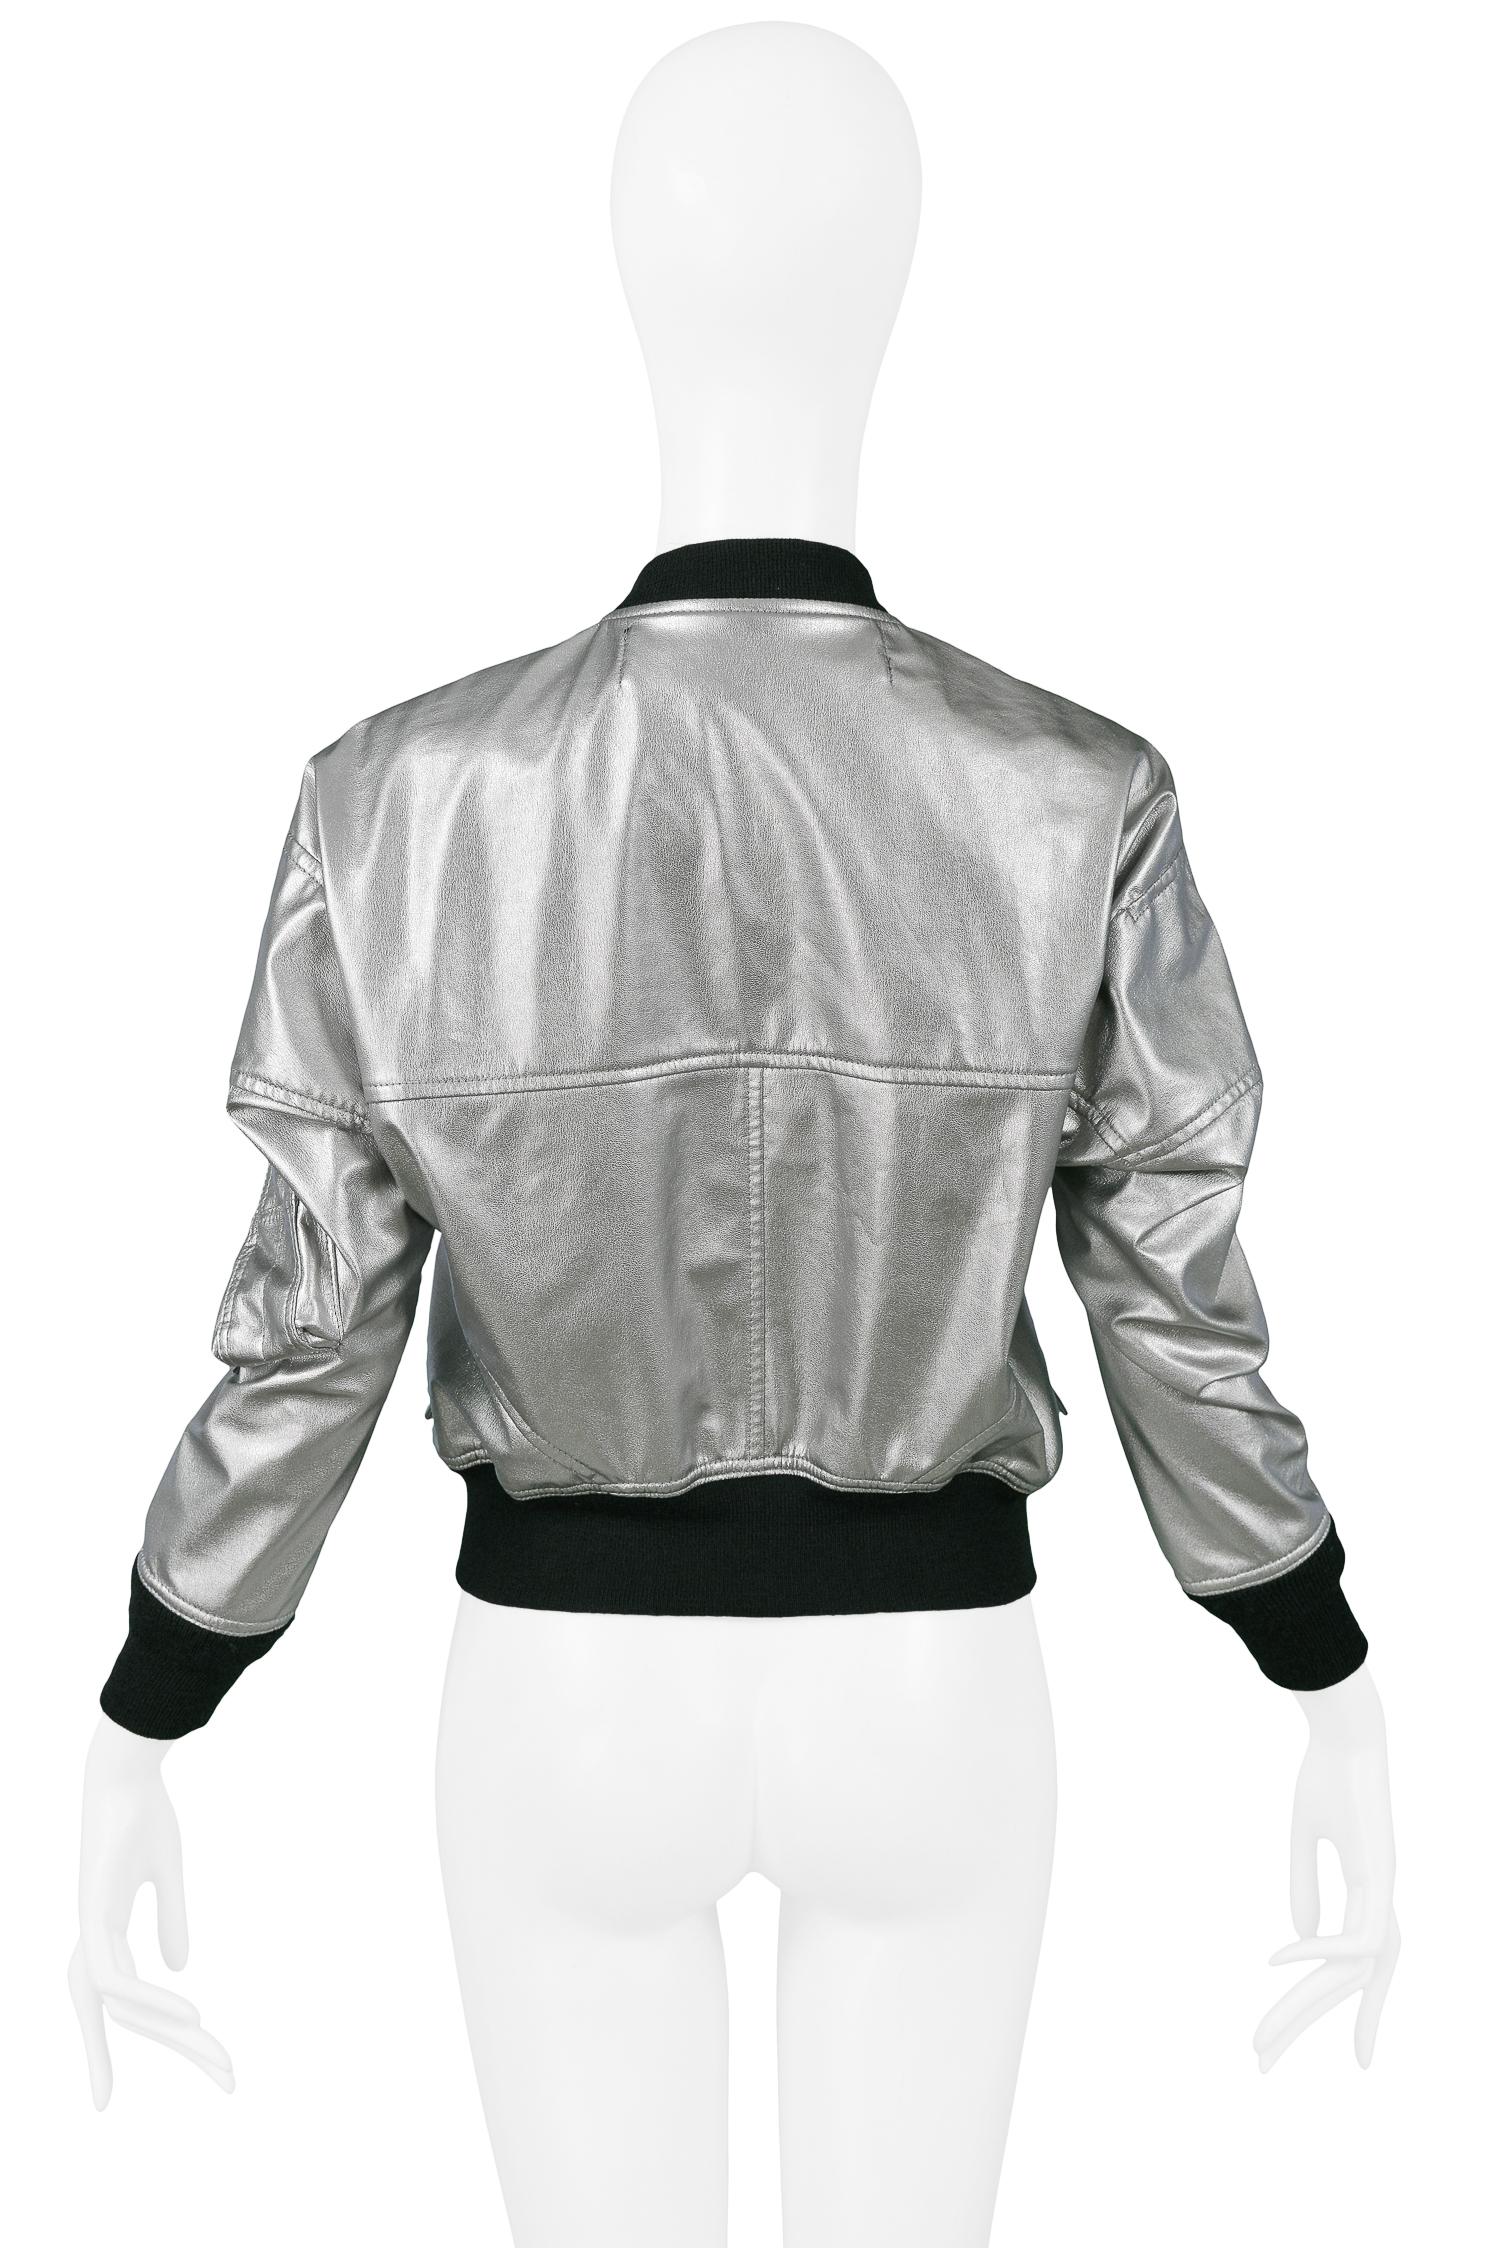 silver metallic jacket